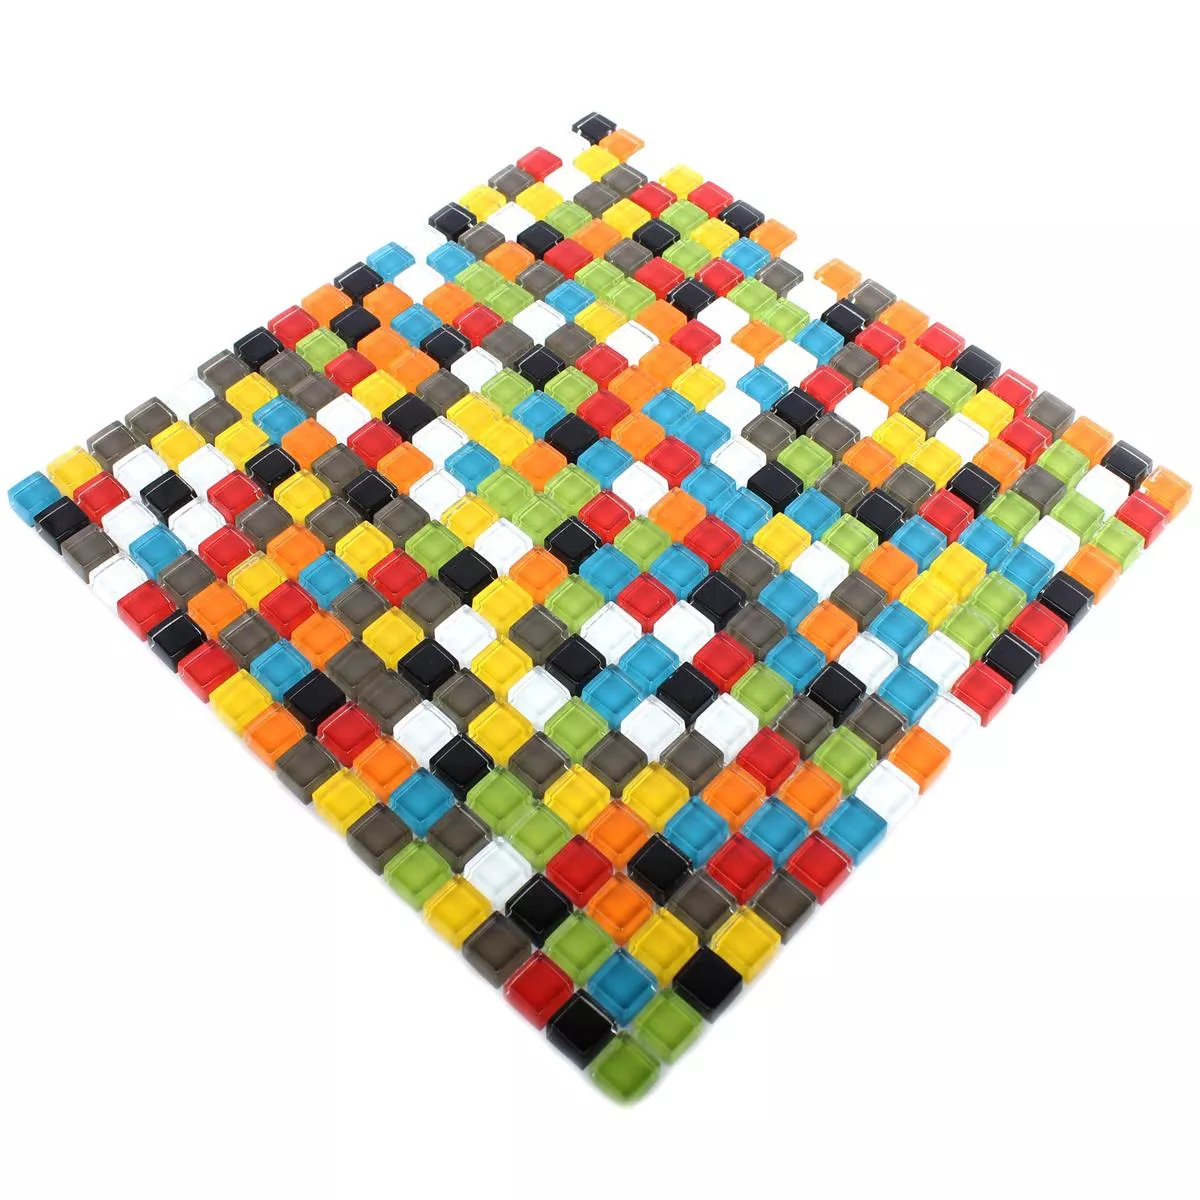 Sample Glass Mosaic Tiles Nostalgie Colored Mix